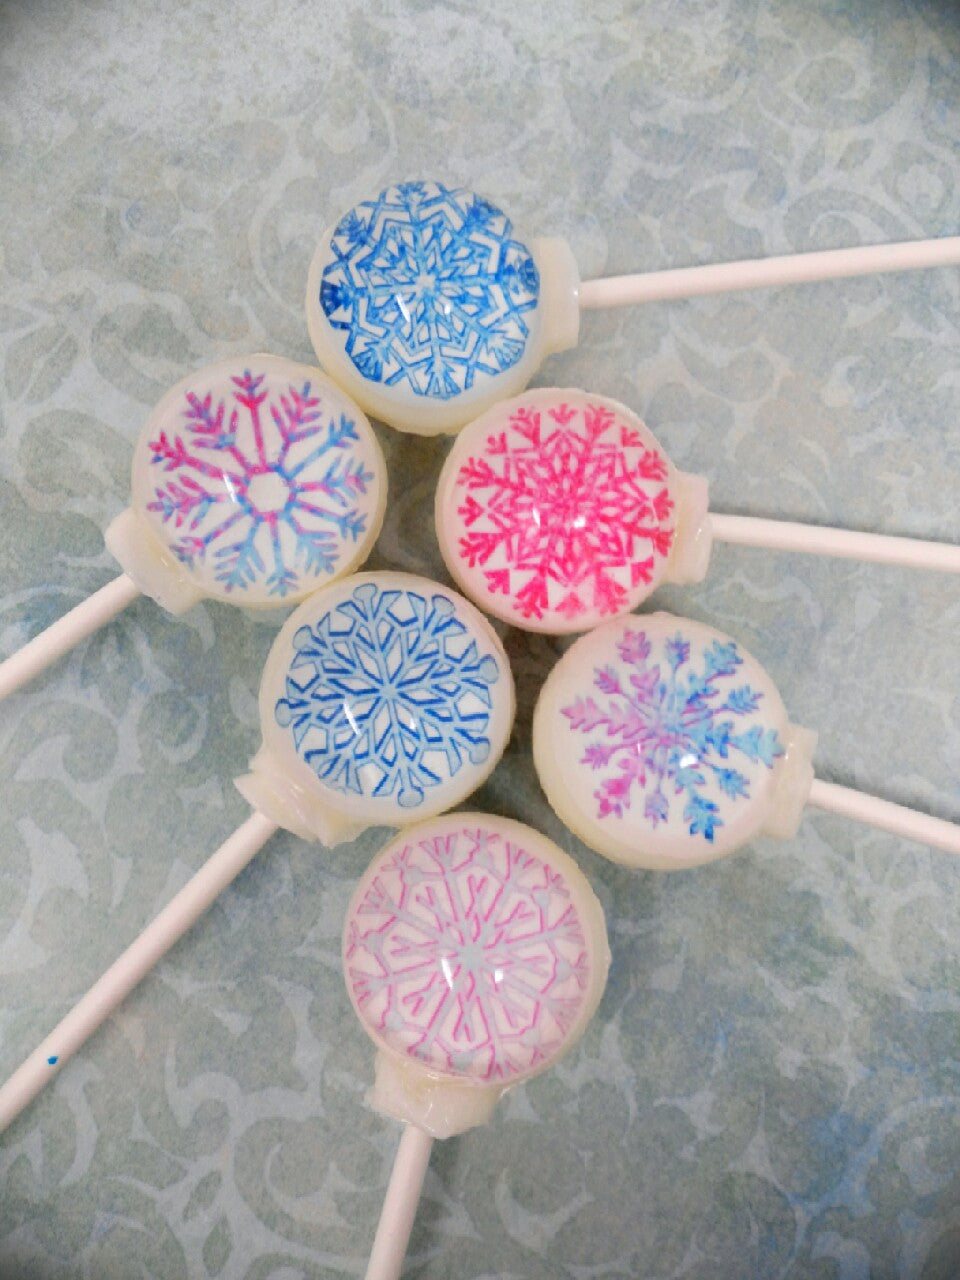 Freshly Fallen Snow Lollipops 6-piece set by I Want Candy!